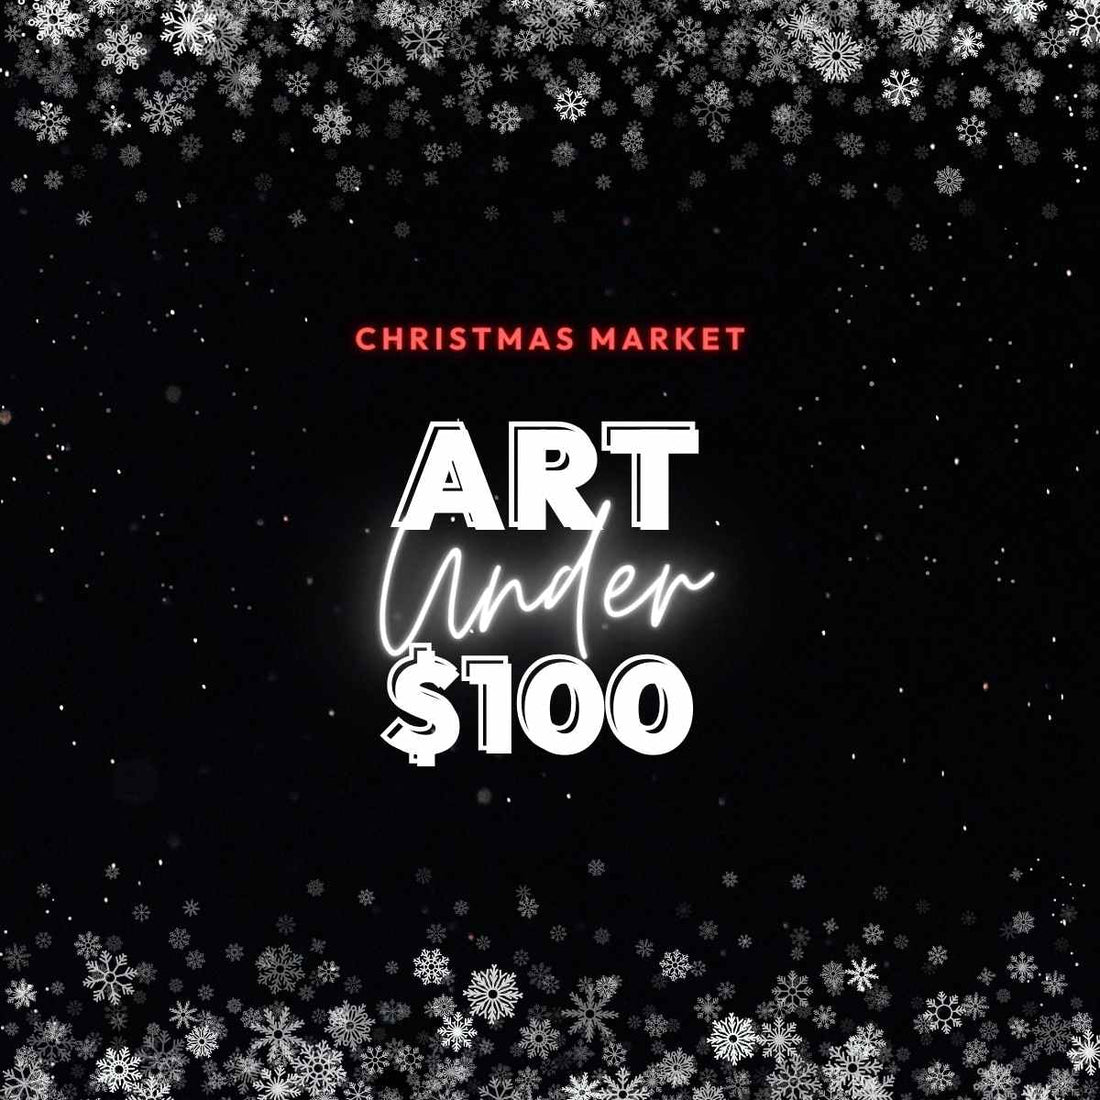 Art under $100 - Christmas Market at Kulturnest